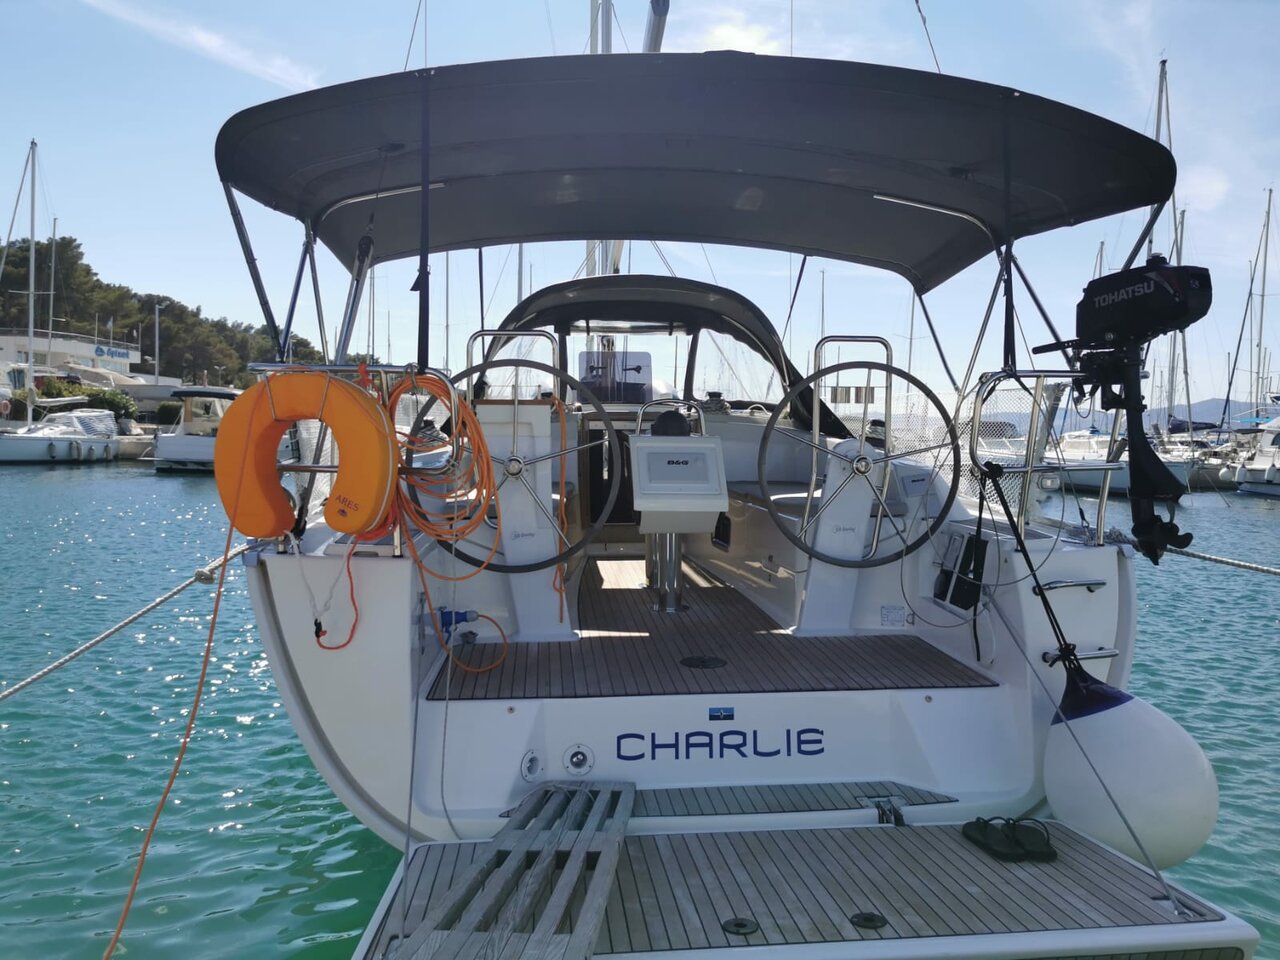 Yachtcharter BavariaCruiser34 Charlie